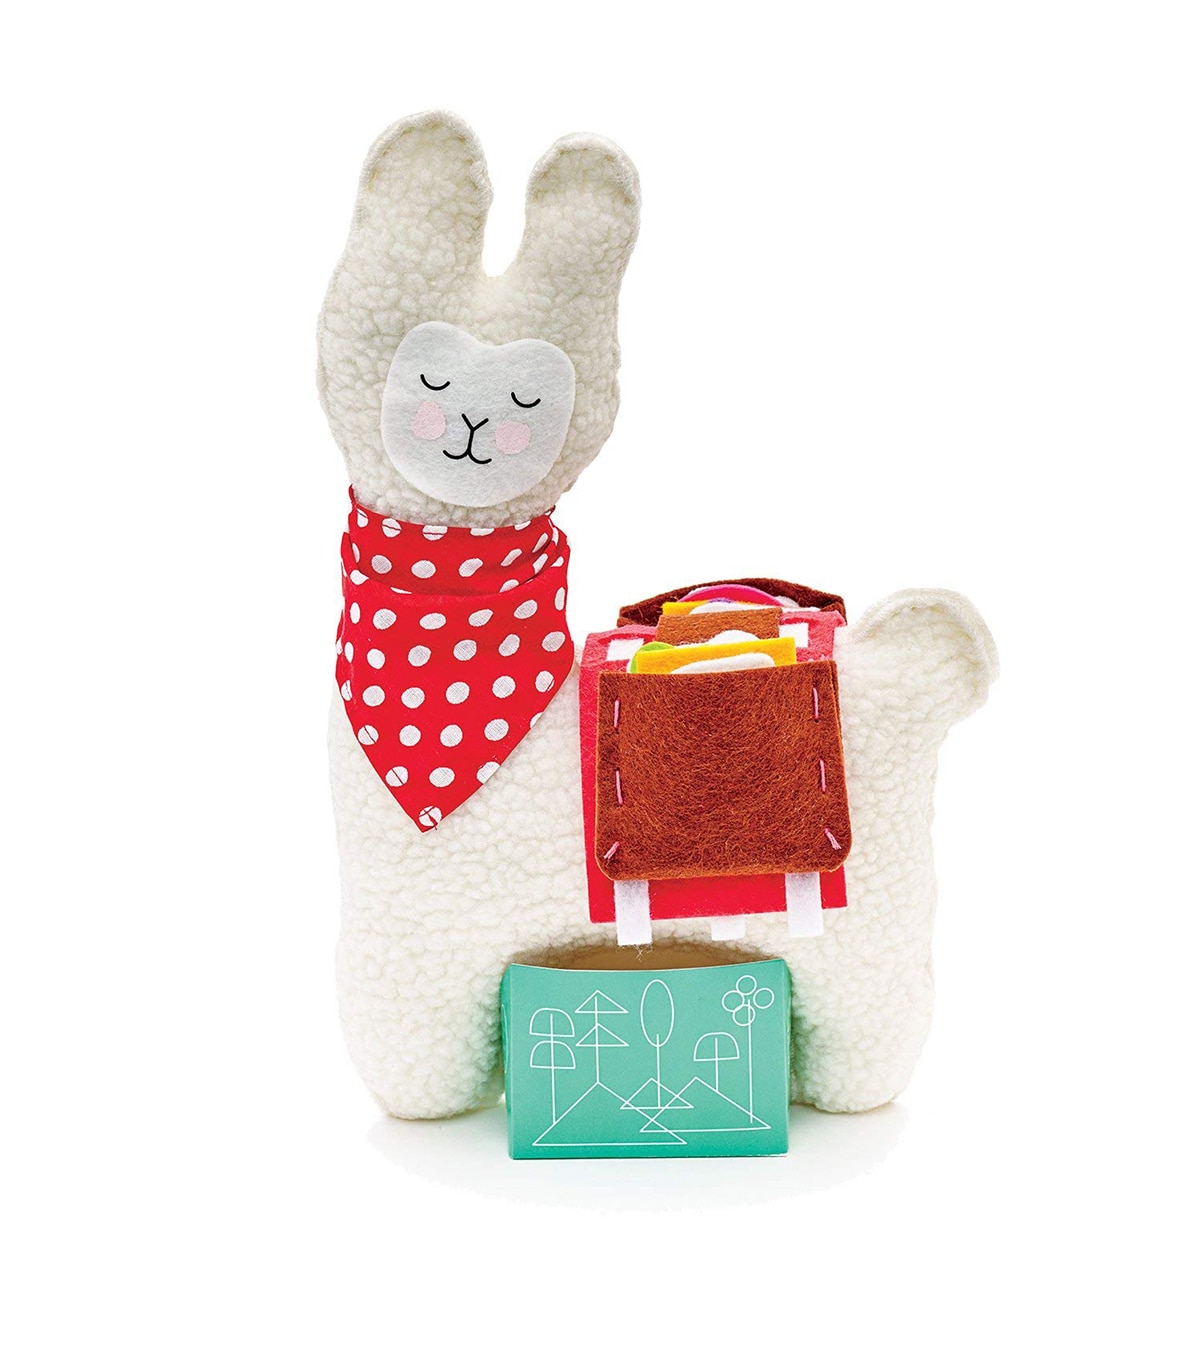 Craft Kit Creativity for Kids Alpaca Picnic Sew Easy So Fun